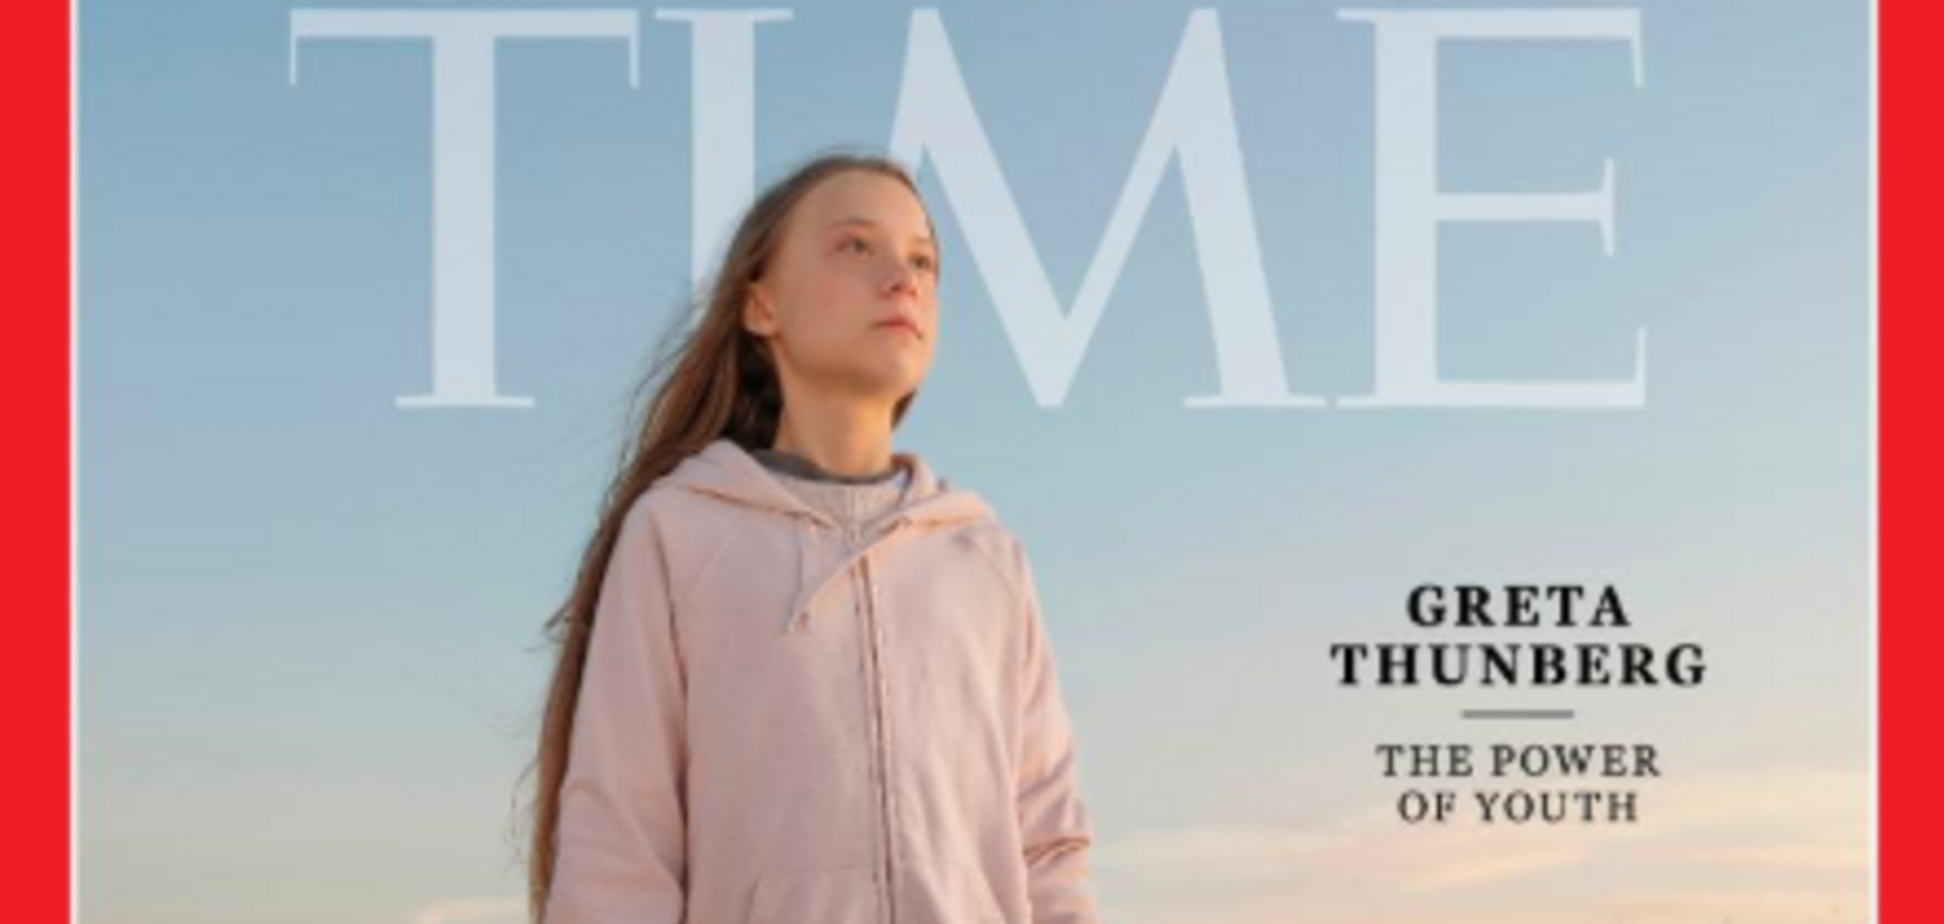 Time назвал 16-летнюю Грету Тунберг 'Человеком года'